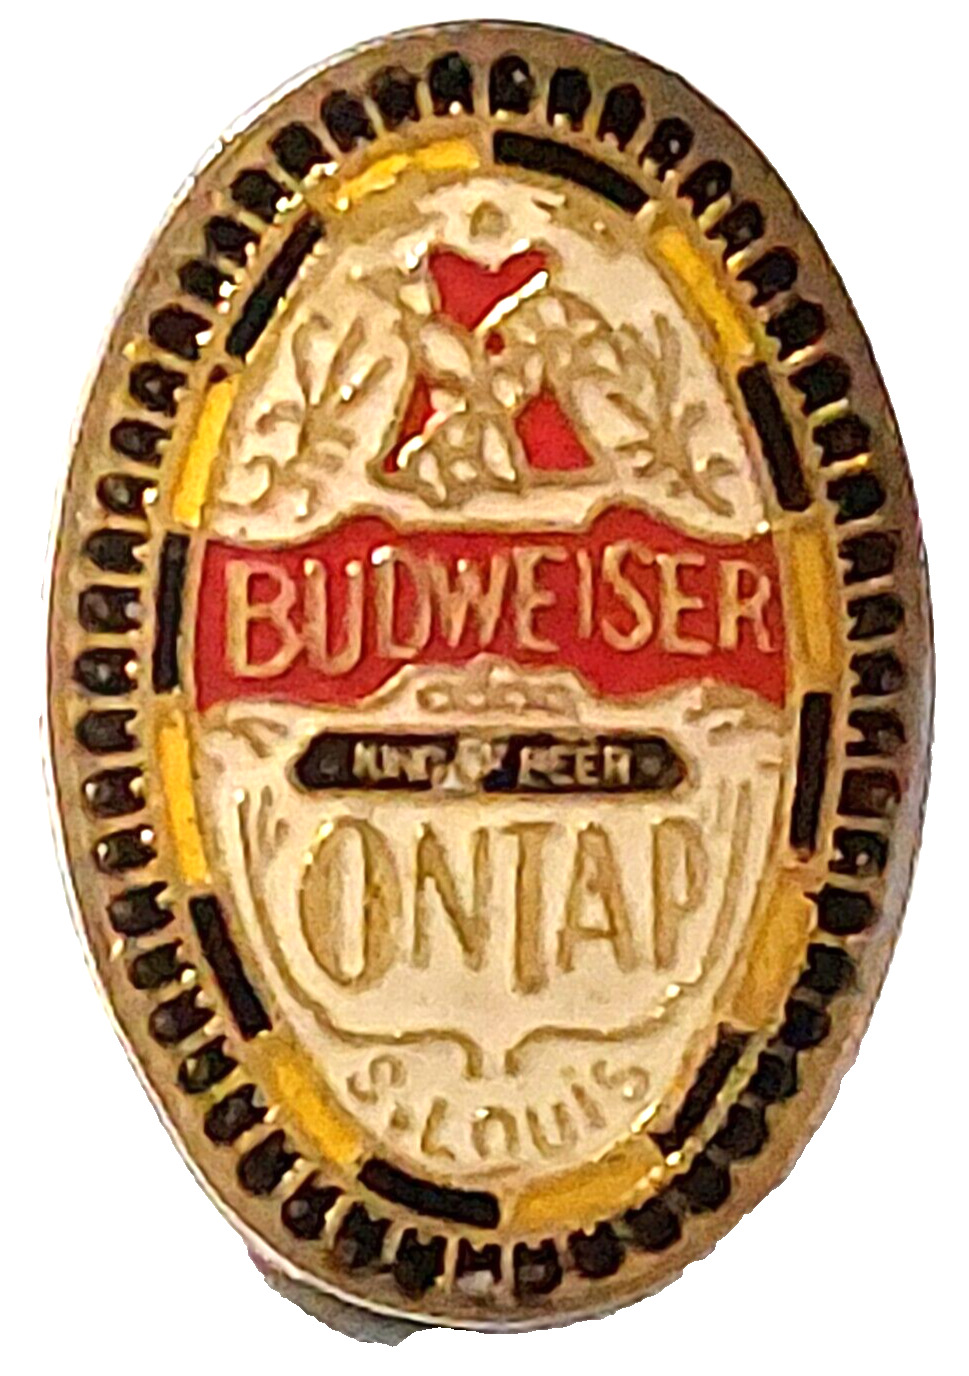 Budweiser King of Beer on Tap St. Louis Lapel Pin